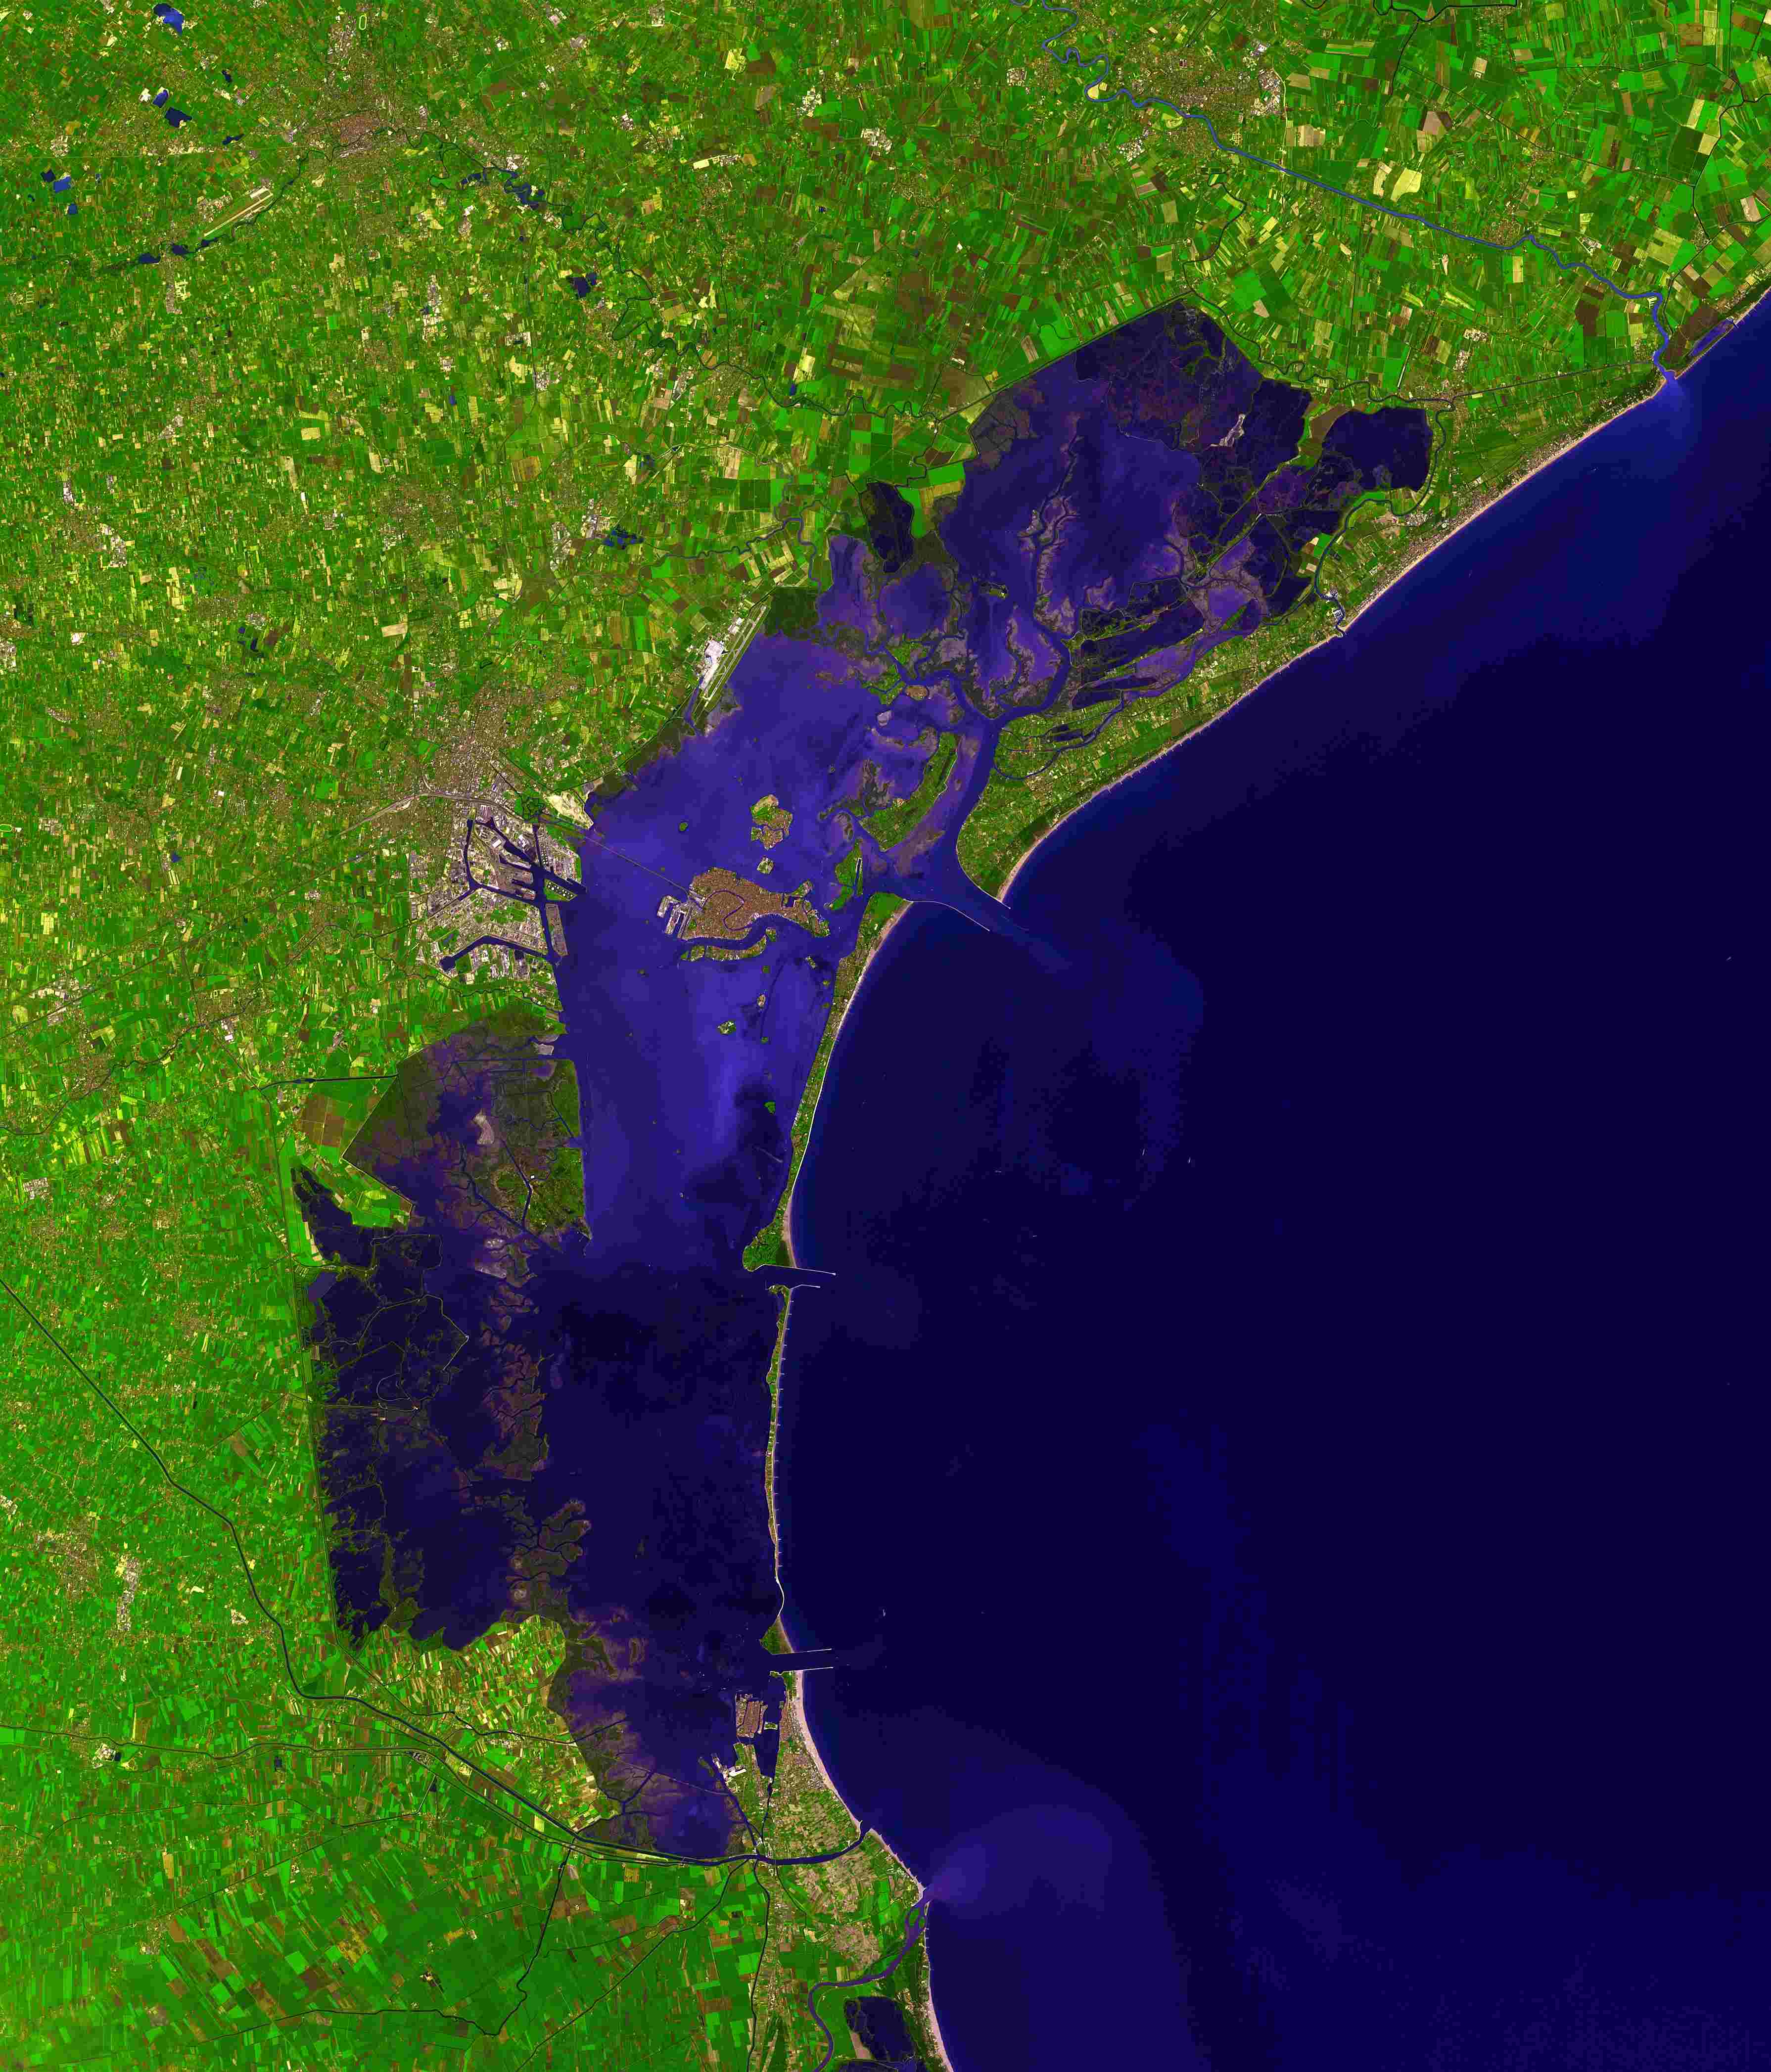 Images Wikimedia Commons/19 NASA Venice Lagoon Land Resource Image December 2001.jpg